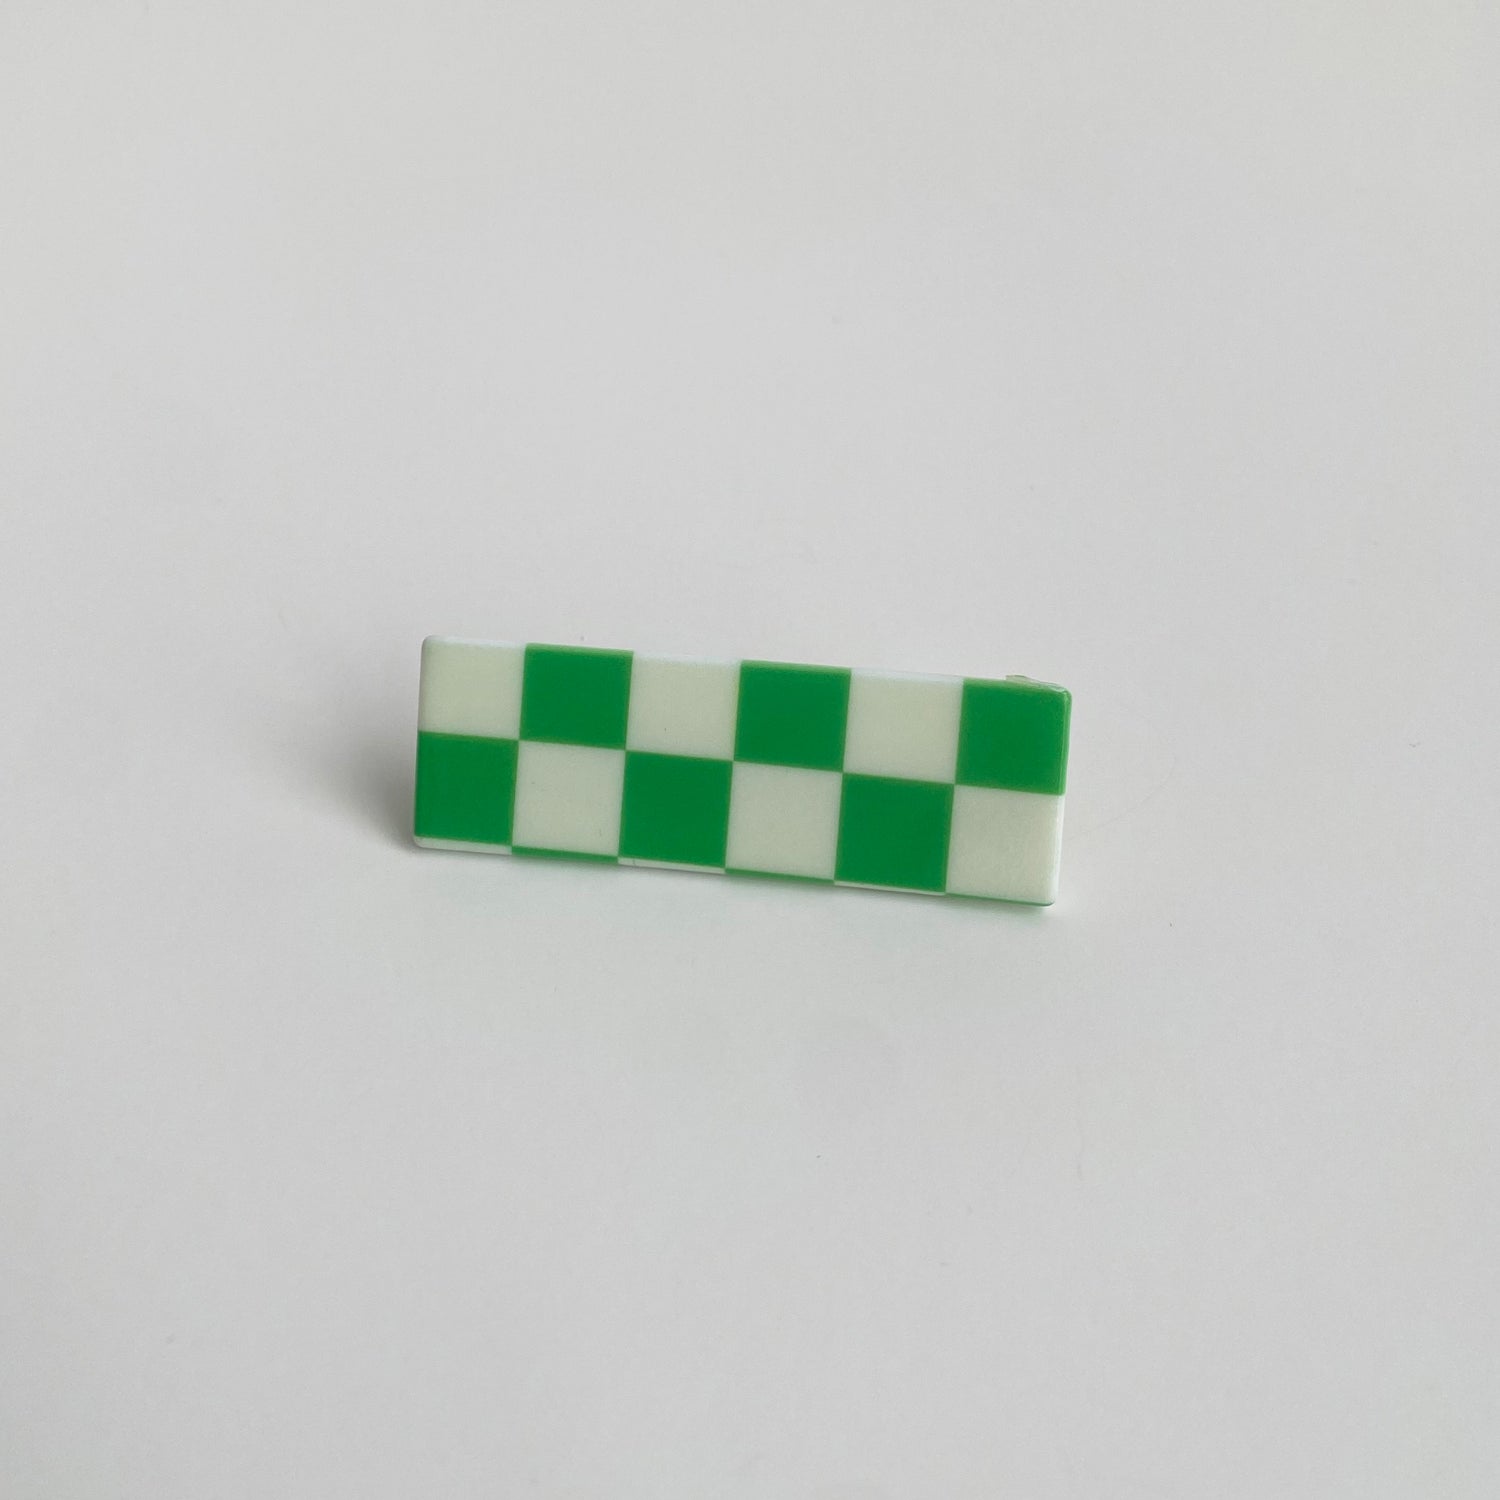 Checkered hairpin in green checkered rectangle